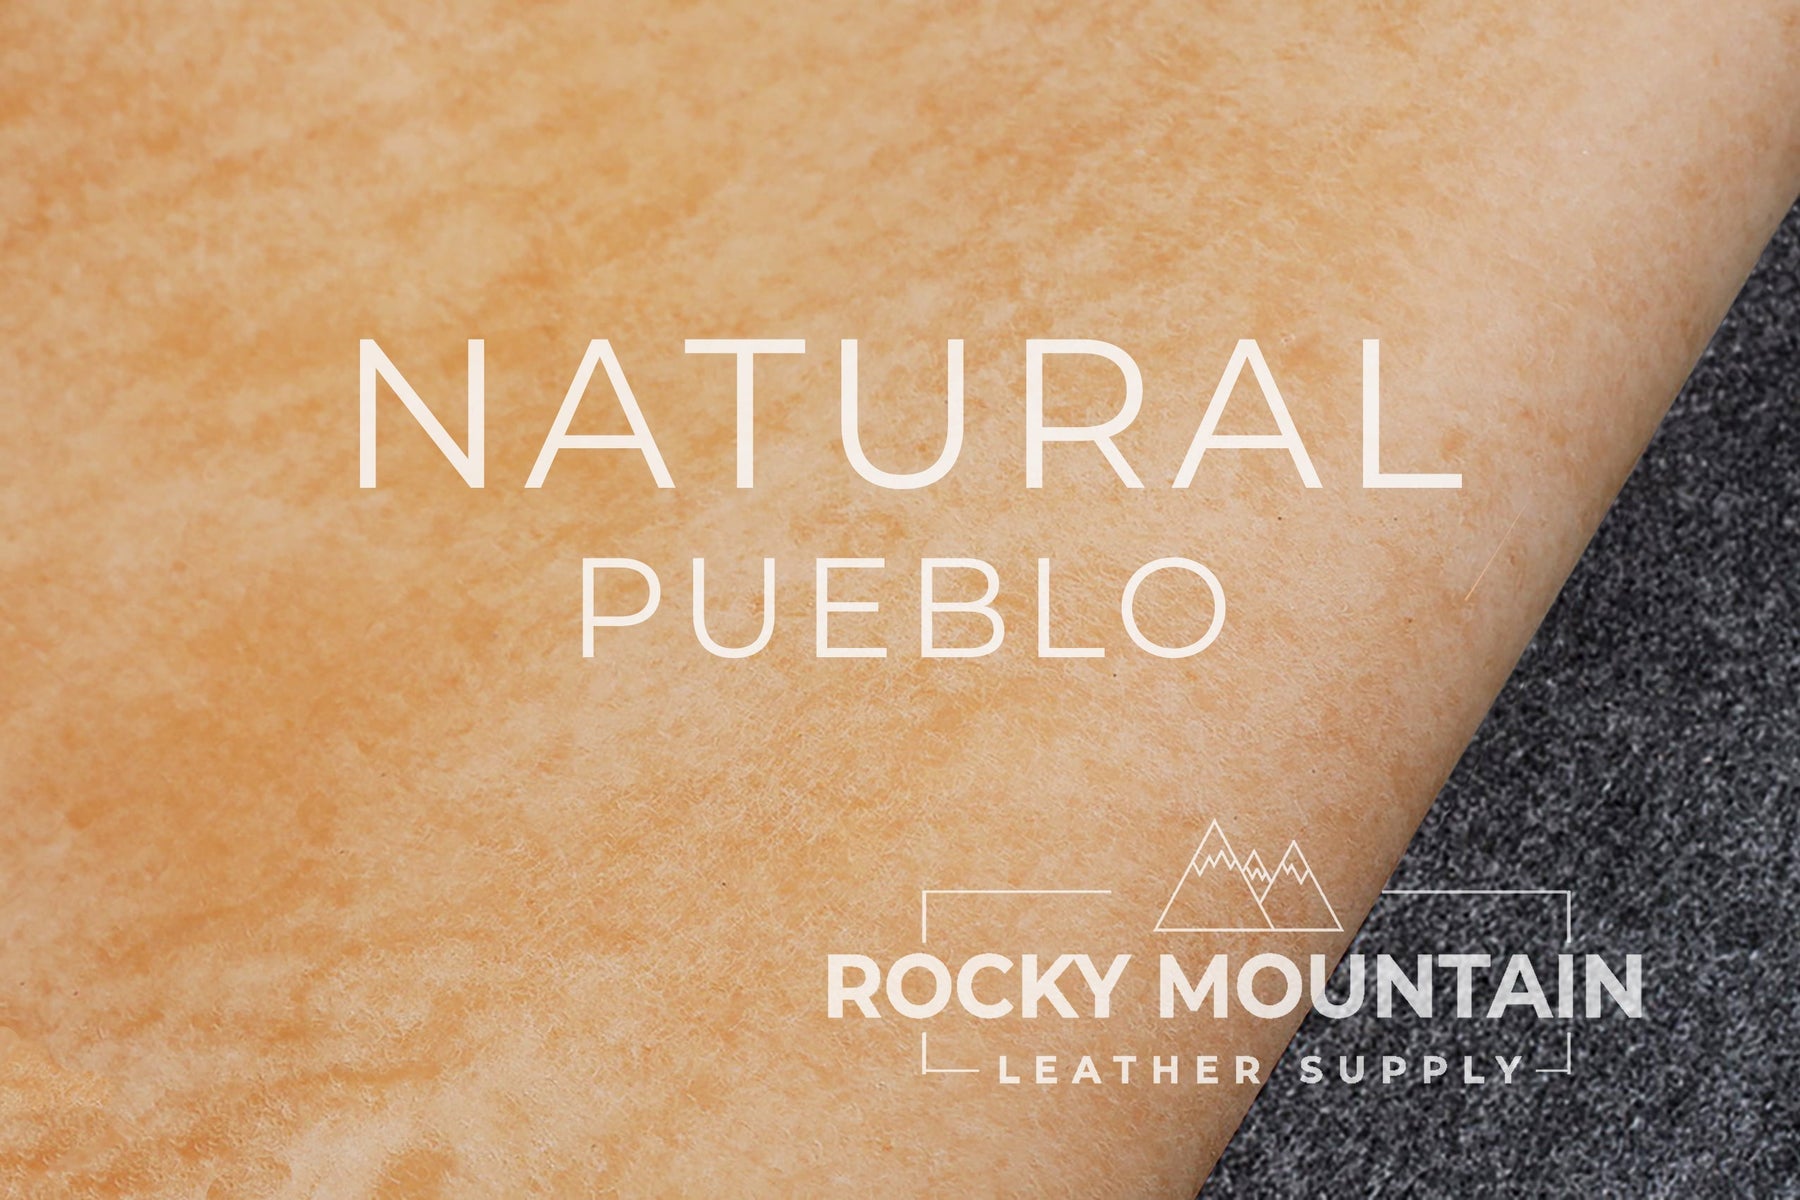 Badalassi Carlo 🇮🇹 - Pueblo - Veg Tanned Leather (SAMPLES)